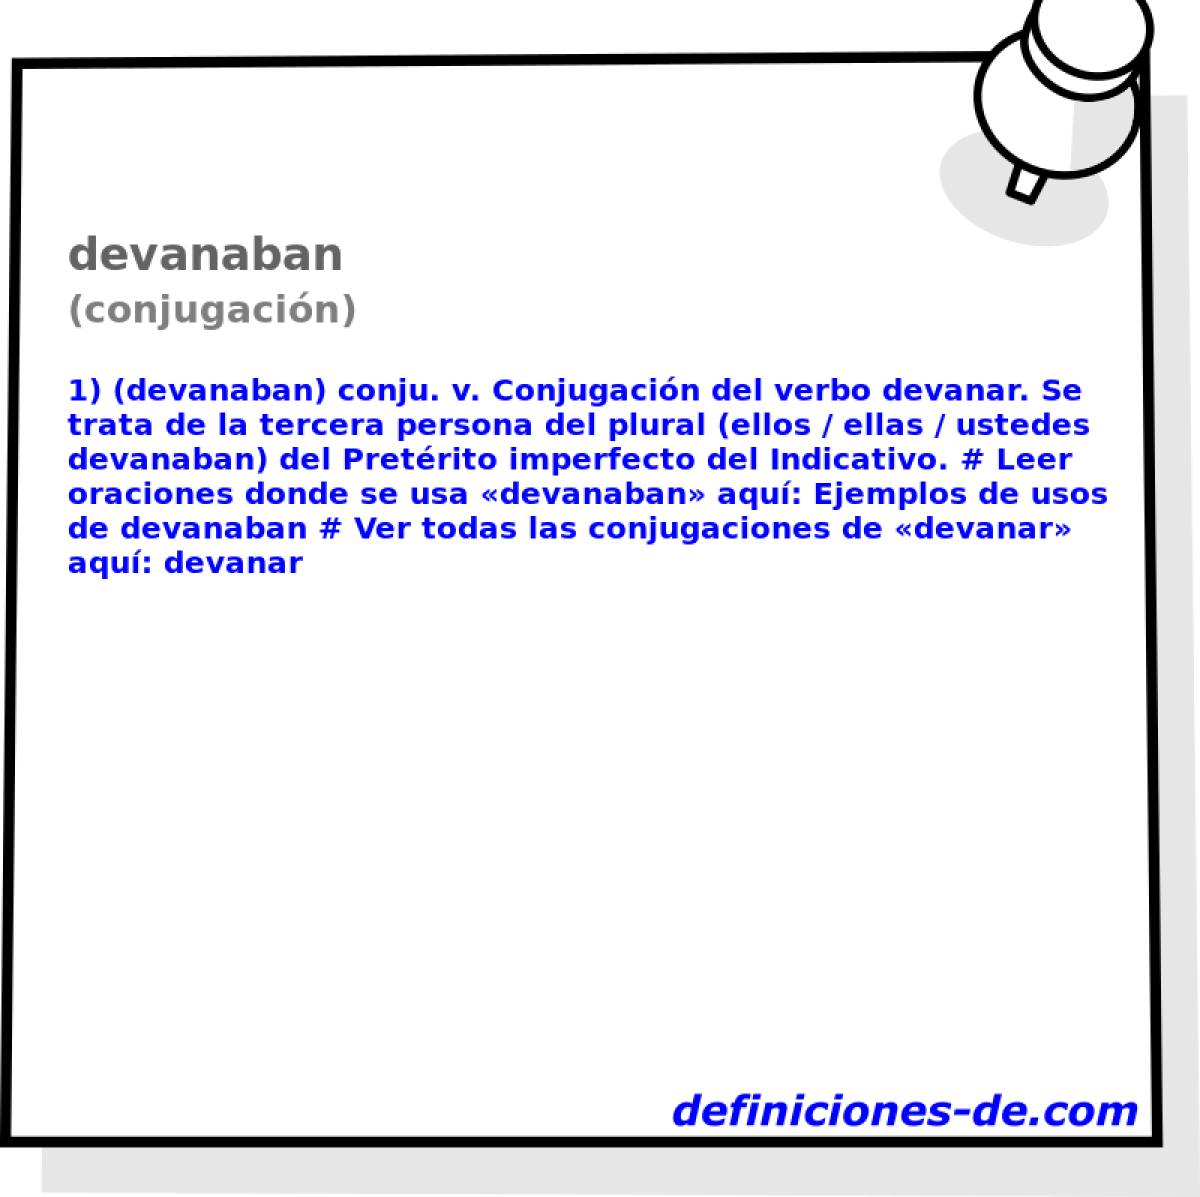 devanaban (conjugacin)